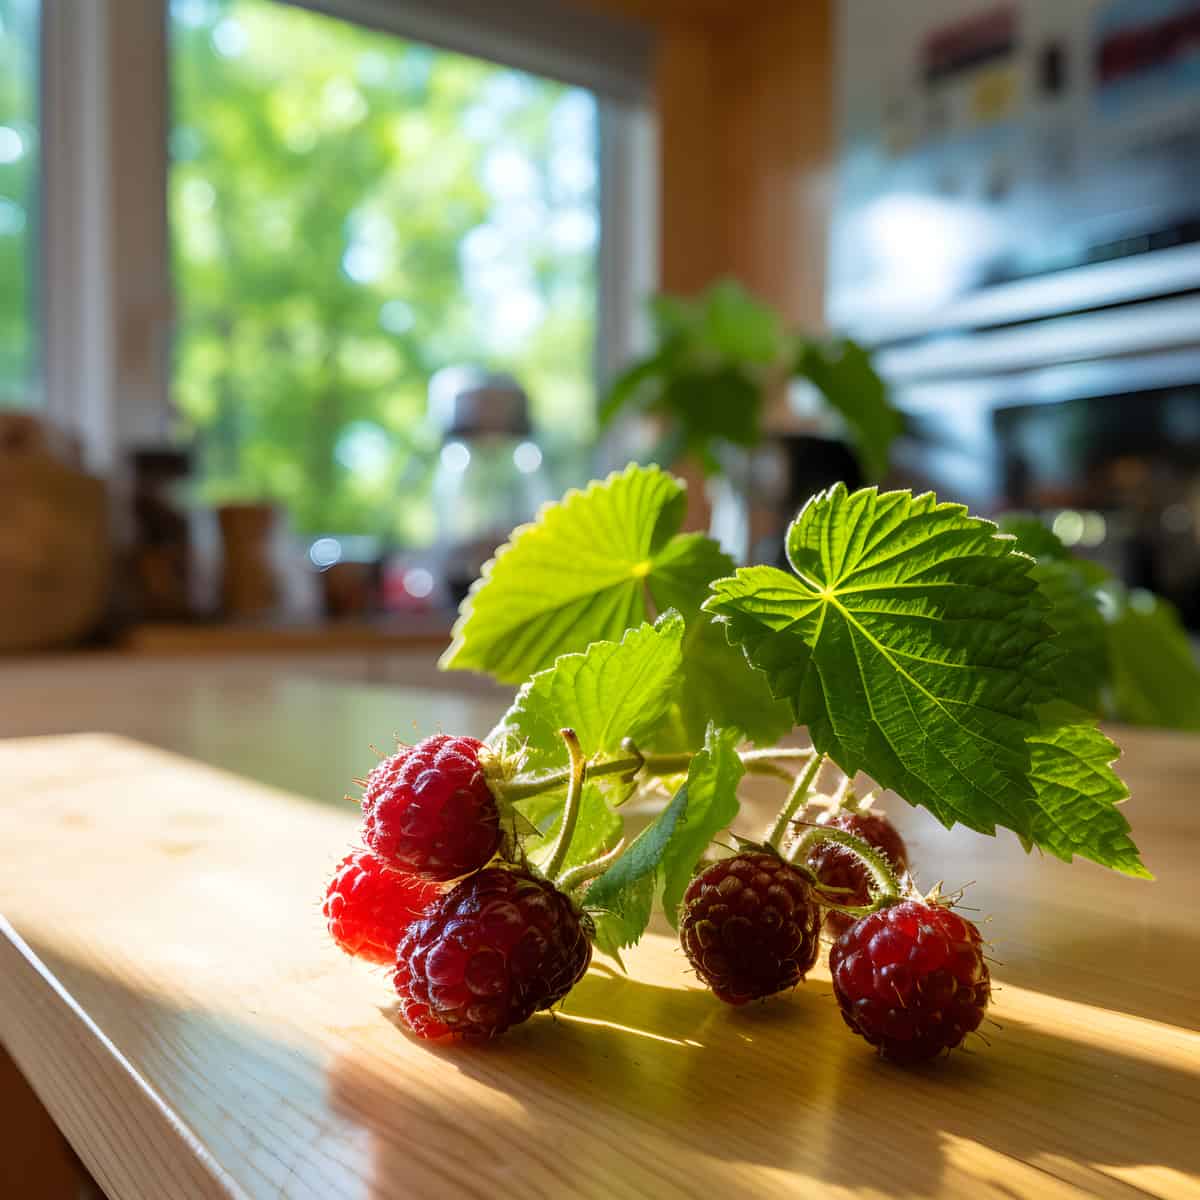 Thimbleberry on a kitchen counter